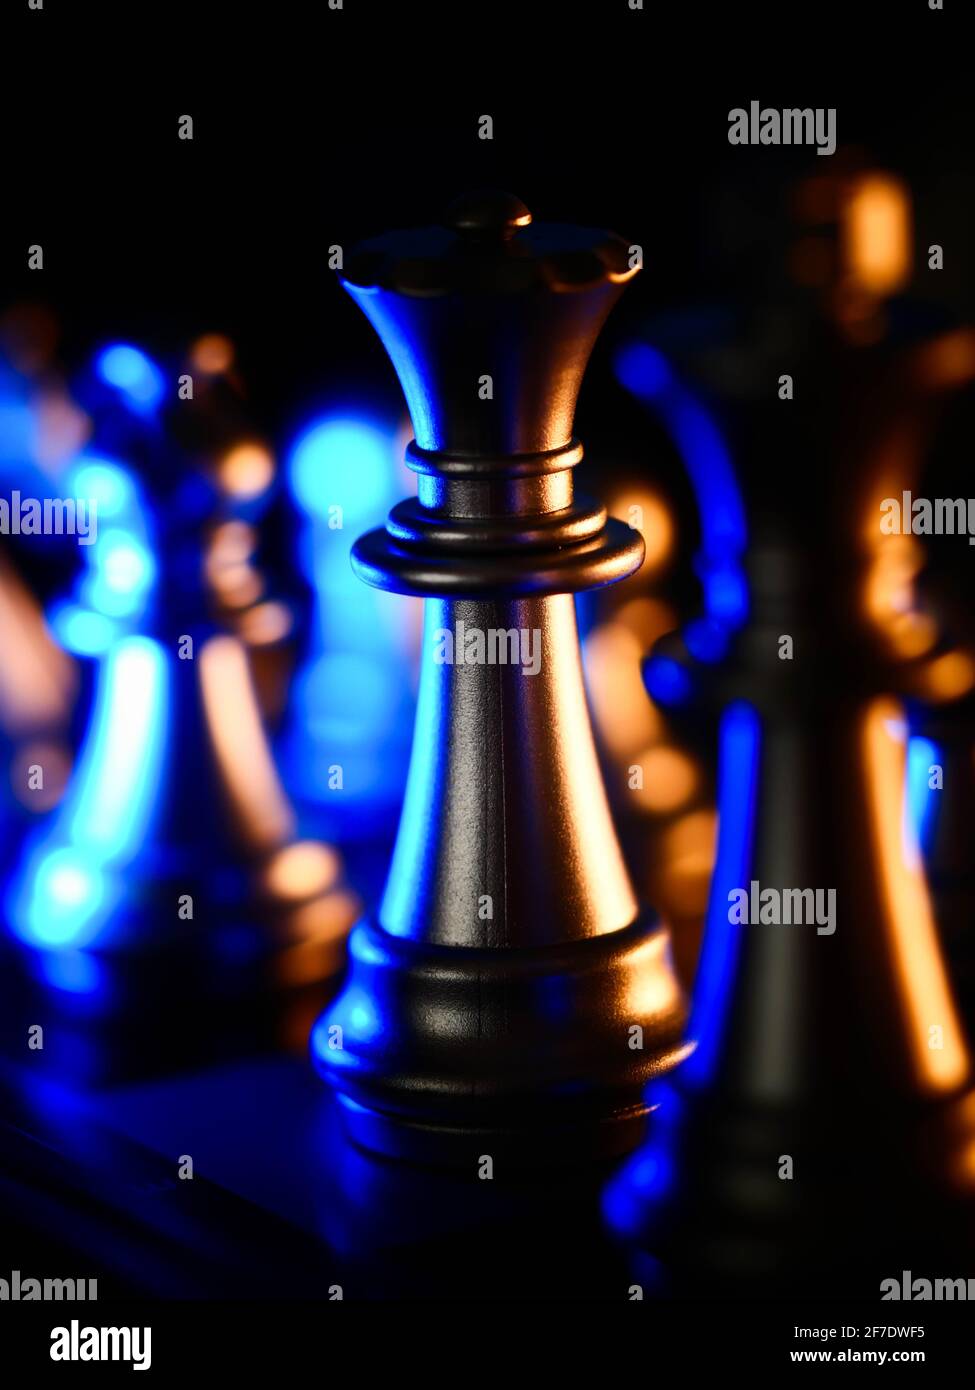 Golden chess board game. Strategy ideas concept business futuristic graphic icon. Stock Photo